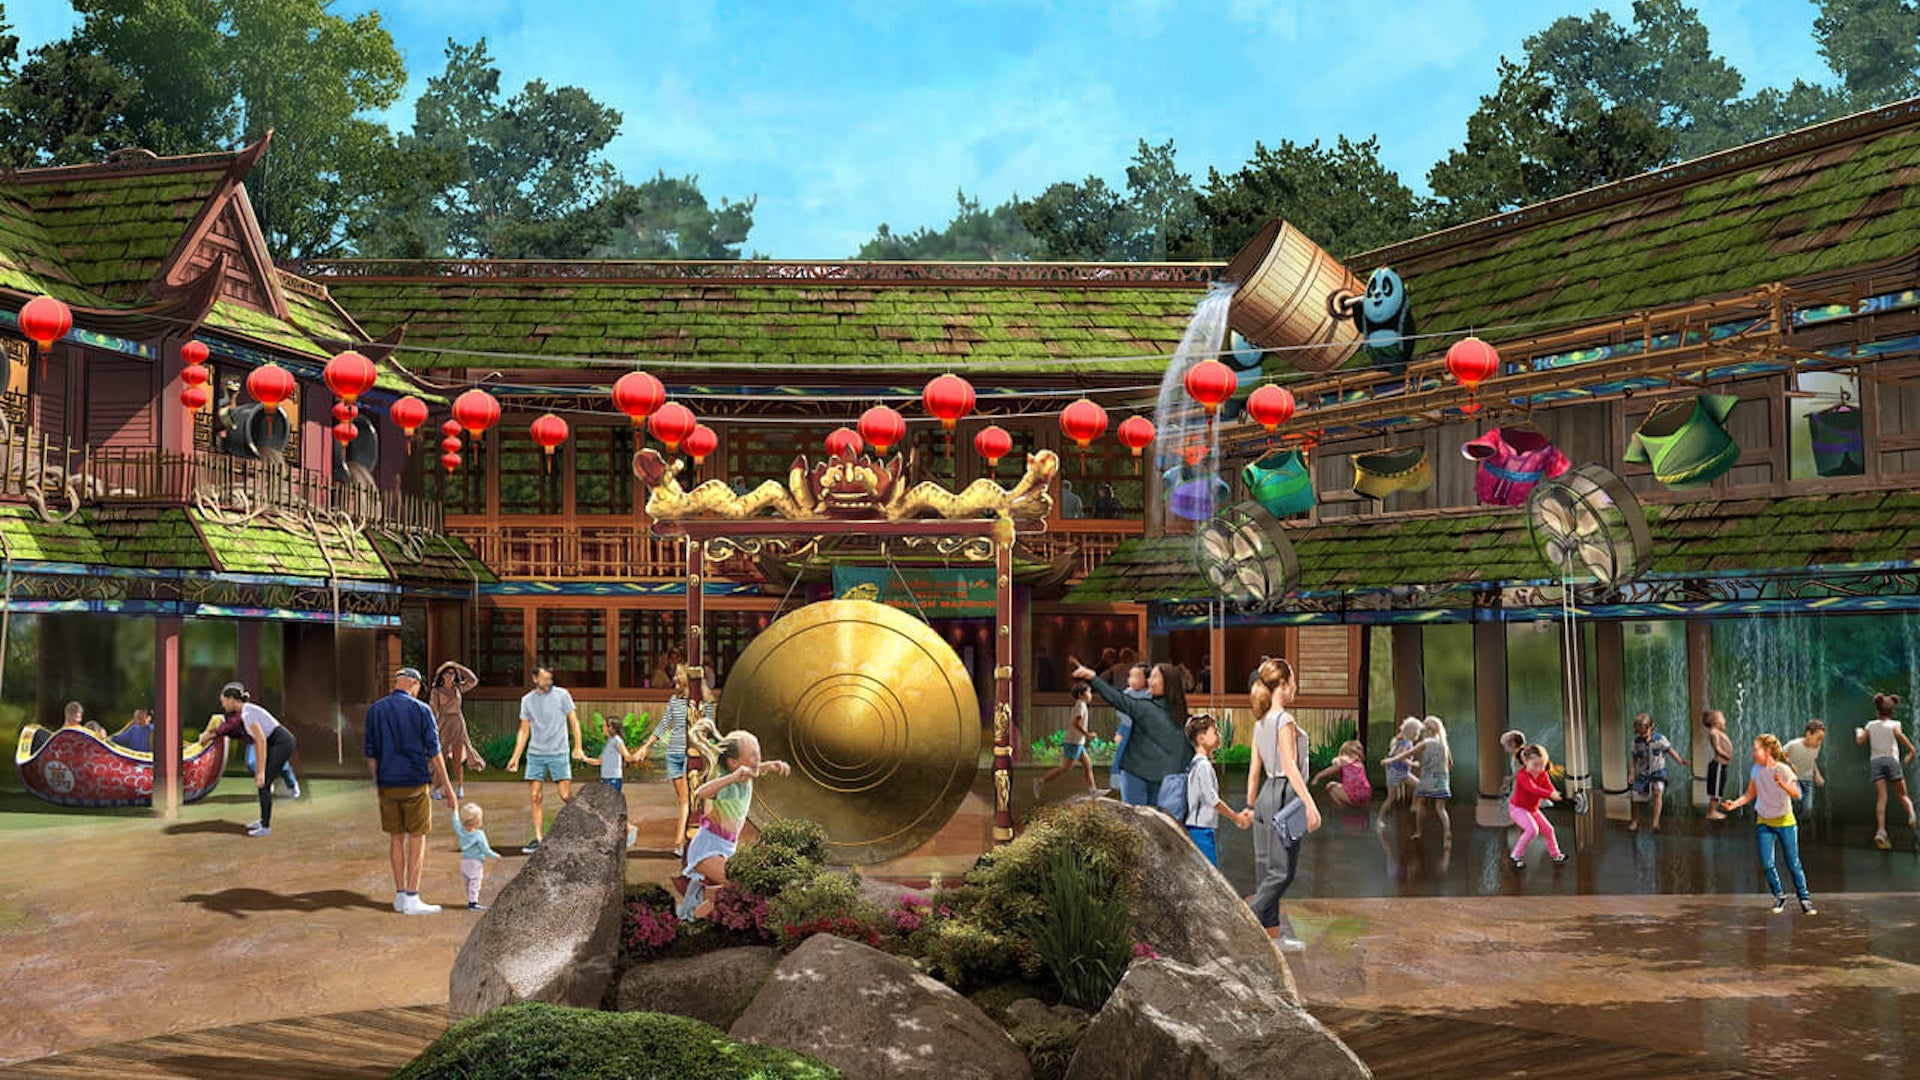 Artist rendering of the Kung Fu Panda area at Dreamworks at Universal Orlando